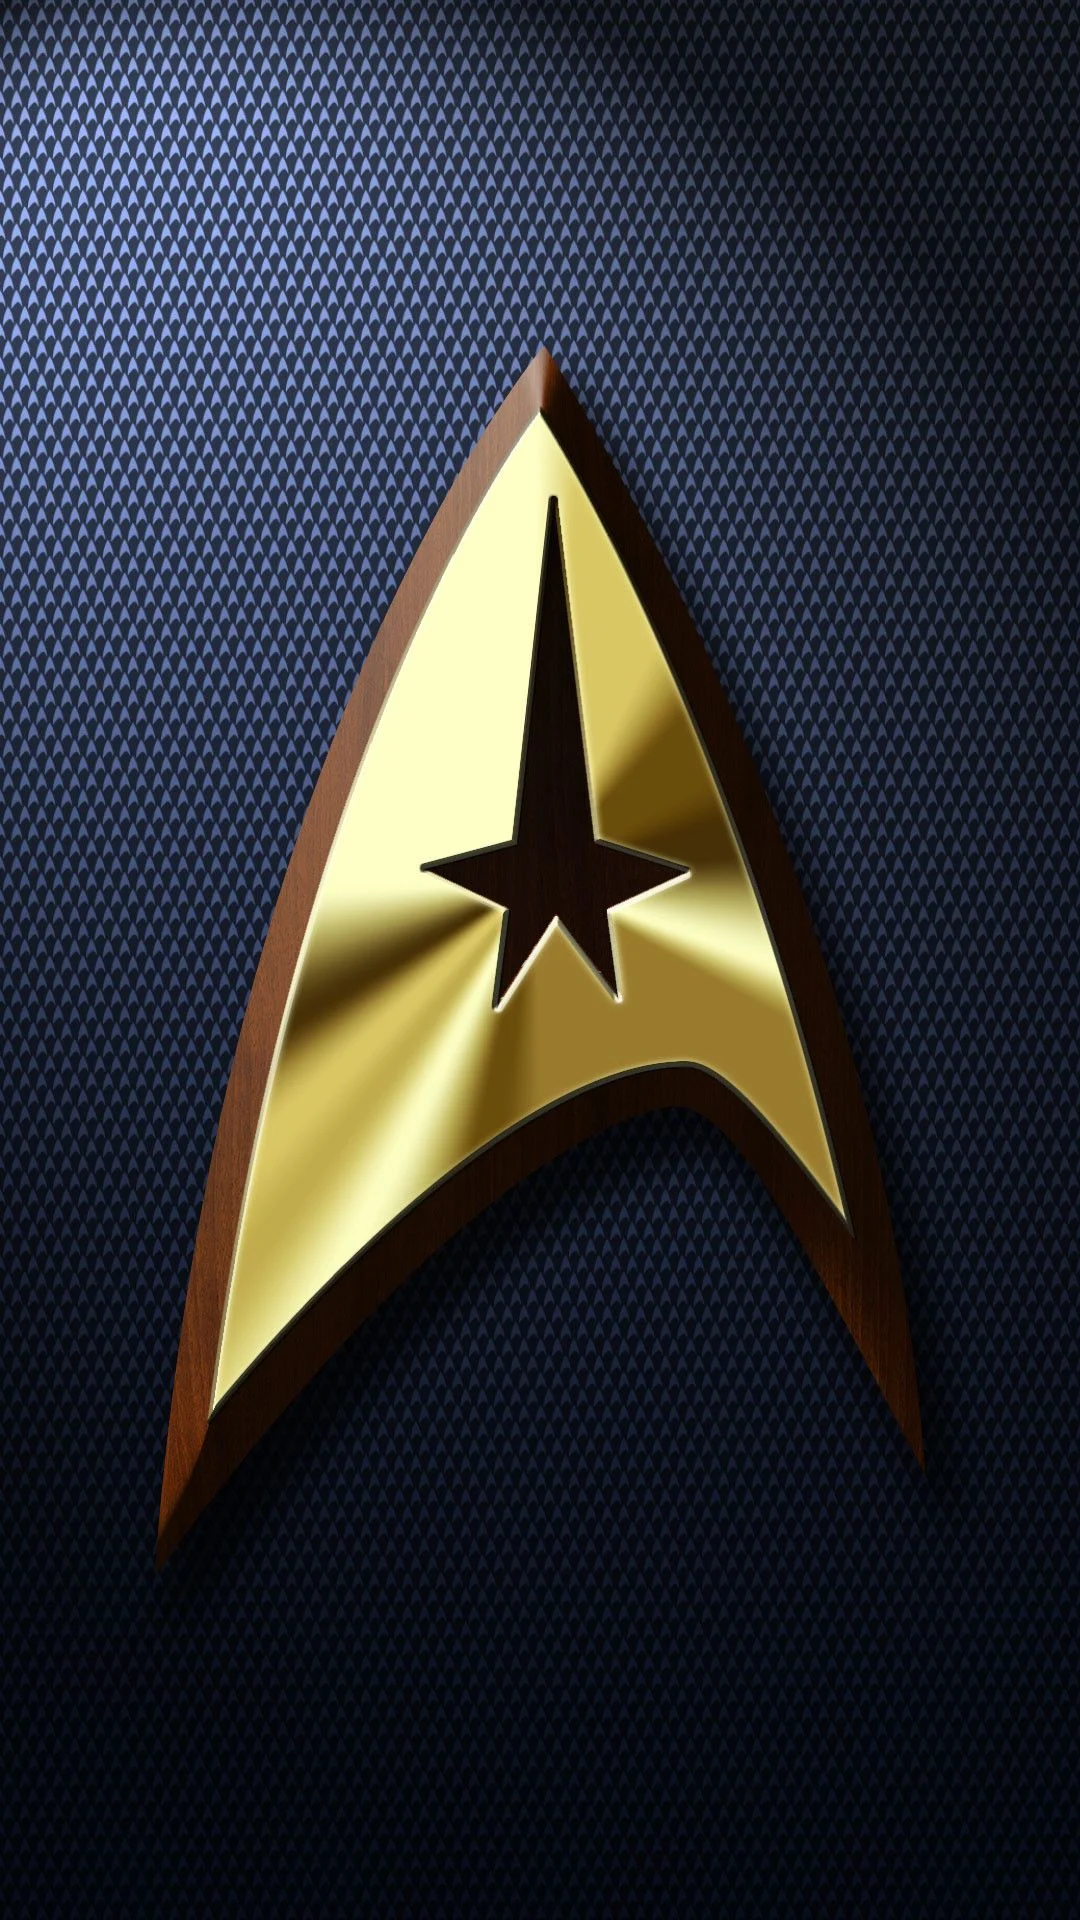 1080x1920 Star Trek Phone Wallpapers Top Free Star Trek Phone Backgrounds